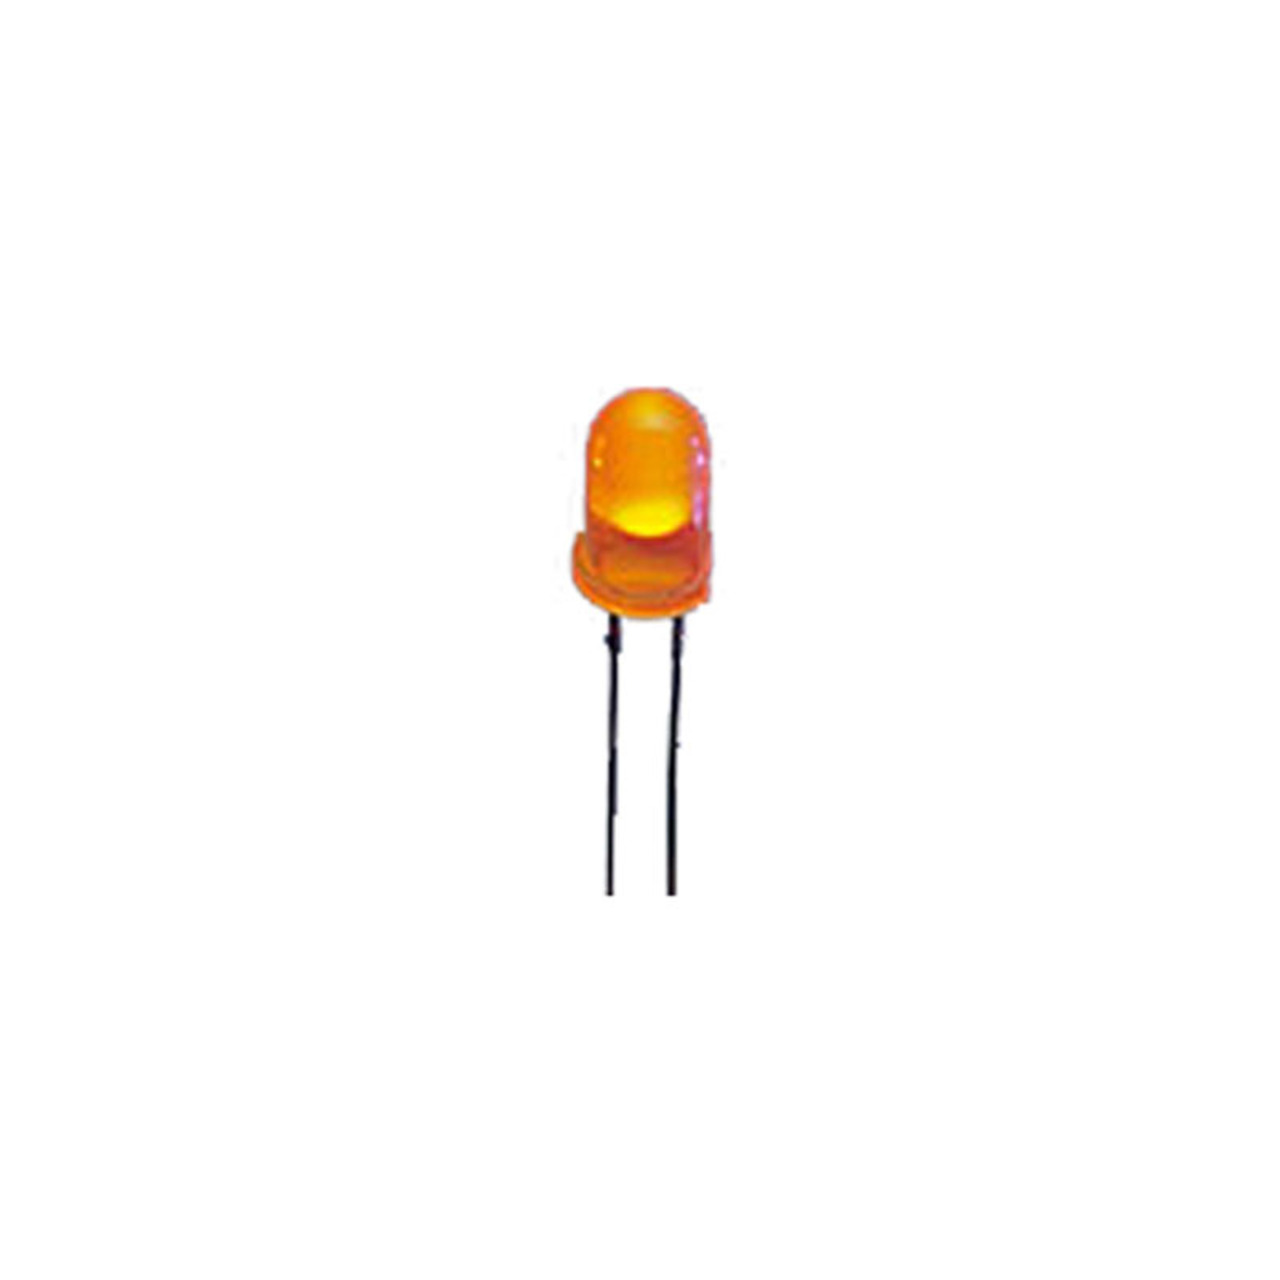 Superhelle 3 mm LED- Orange- 1-300 mcd- 10er-Pack unter Komponenten